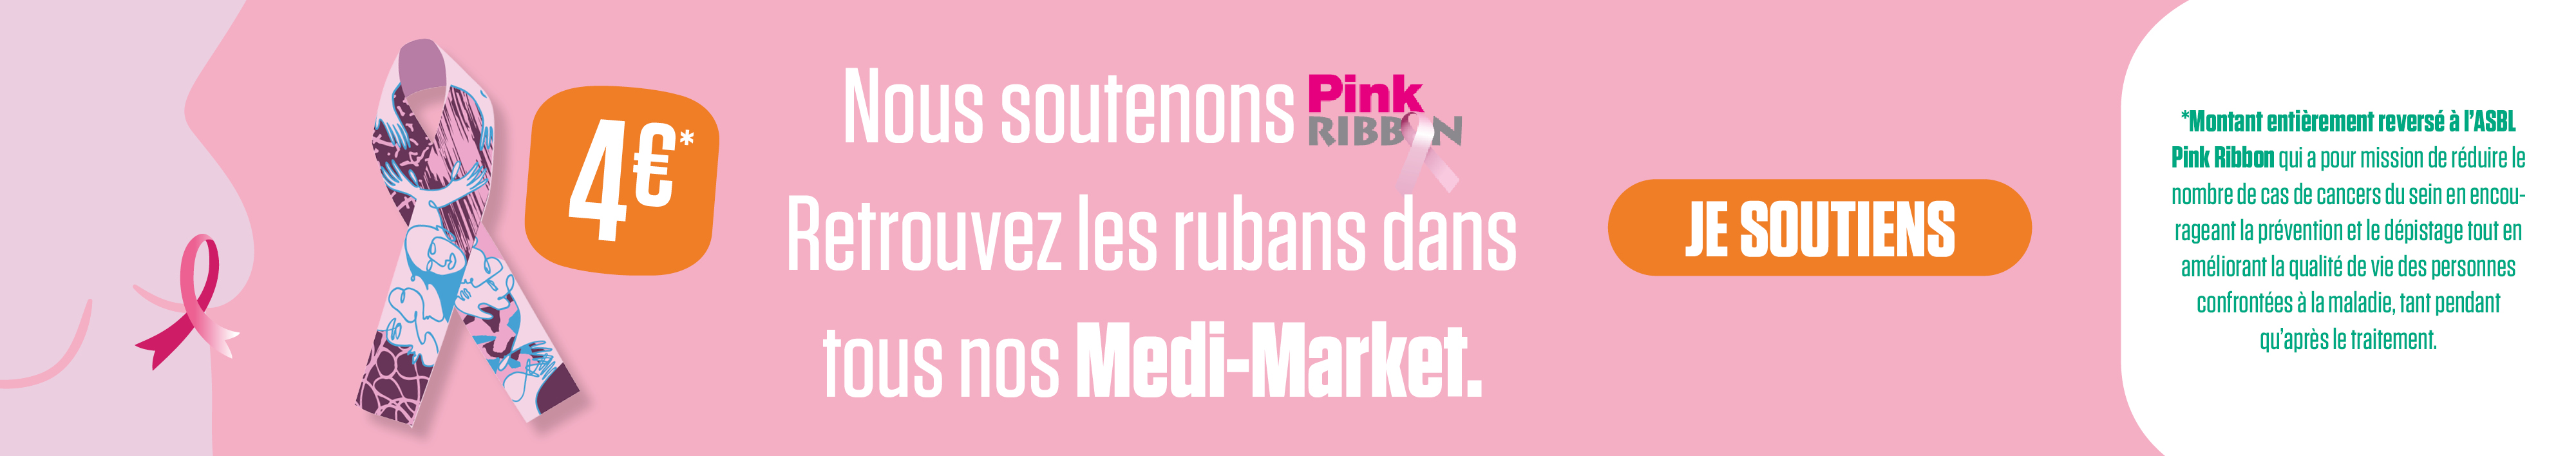 Banner_Pink Ribbon_PH_FR_385x613.jpg